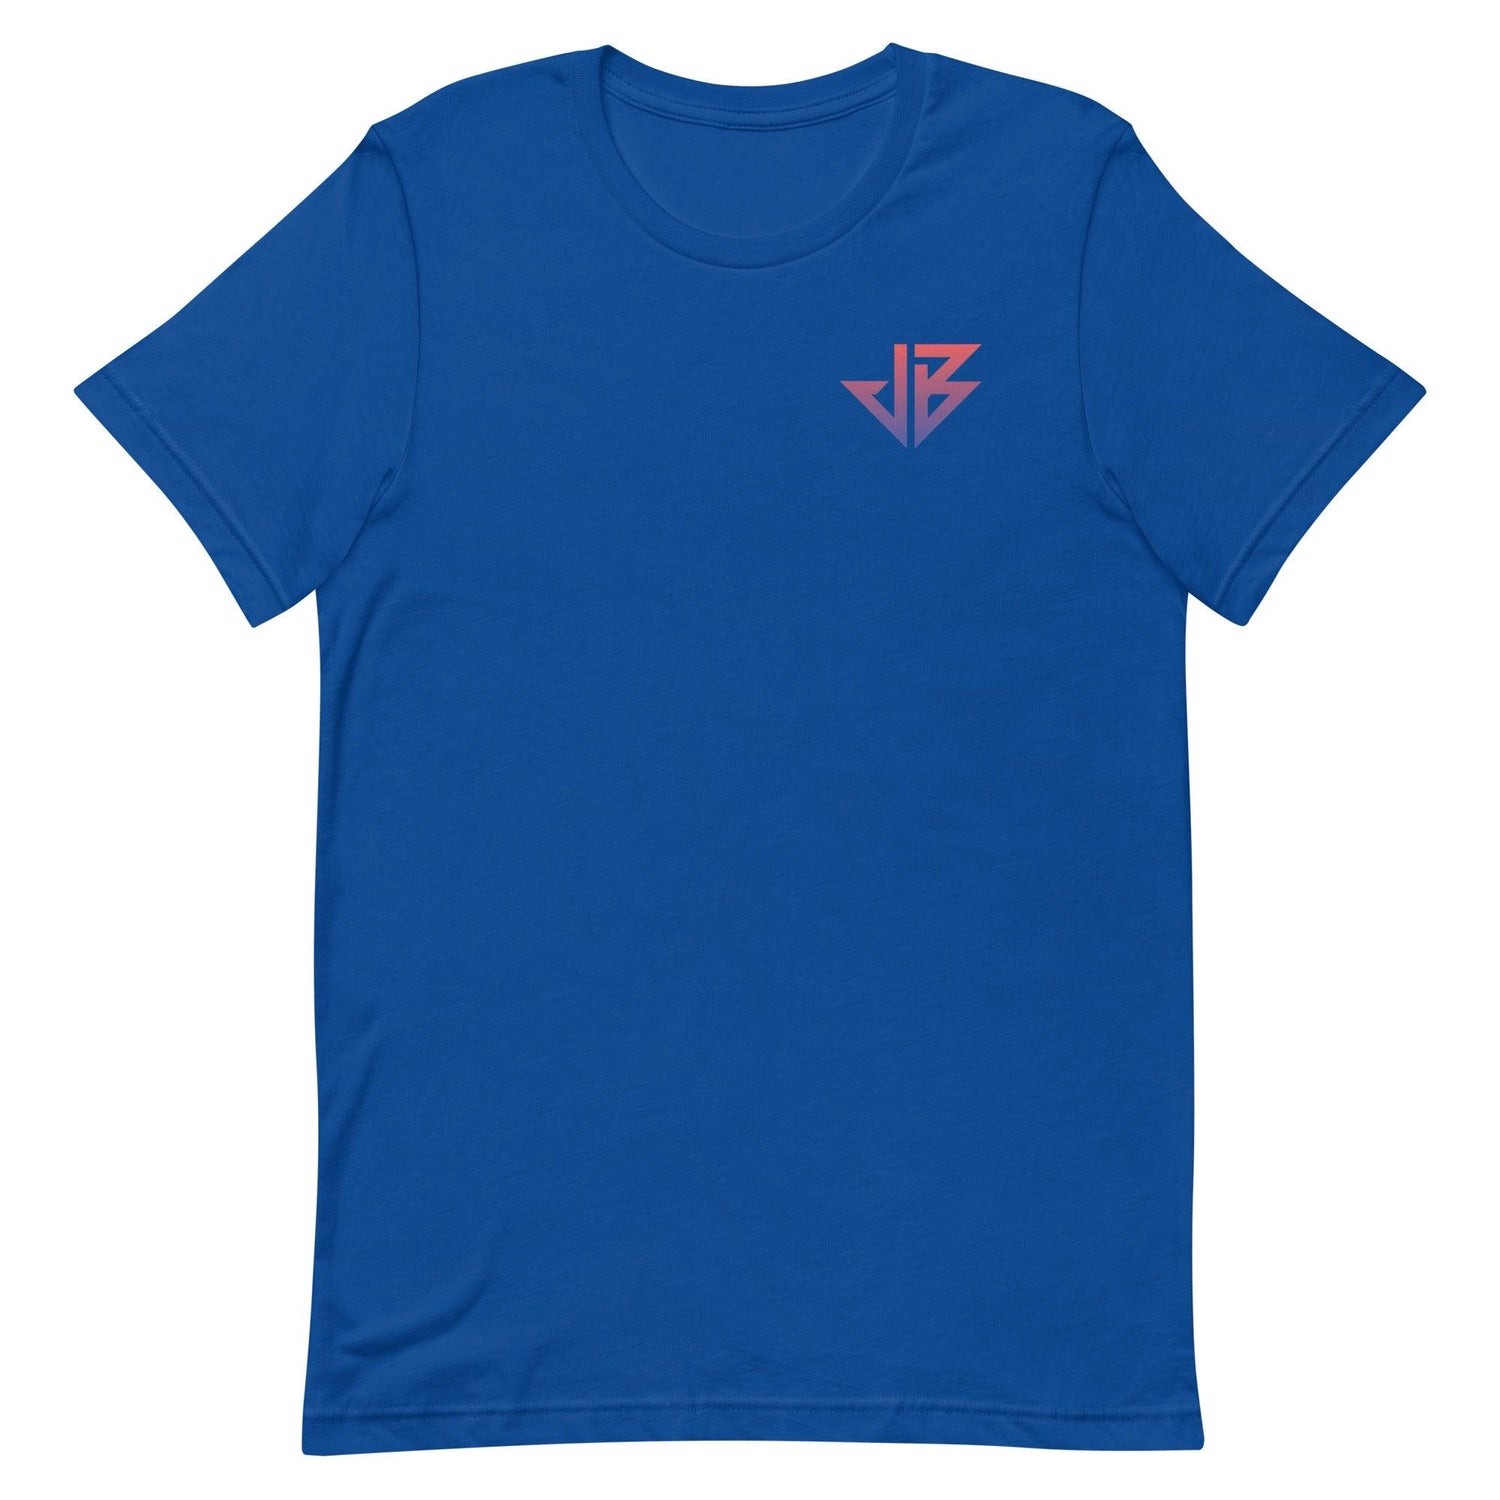 Jordan Bowden "JB" t-shirt - Fan Arch